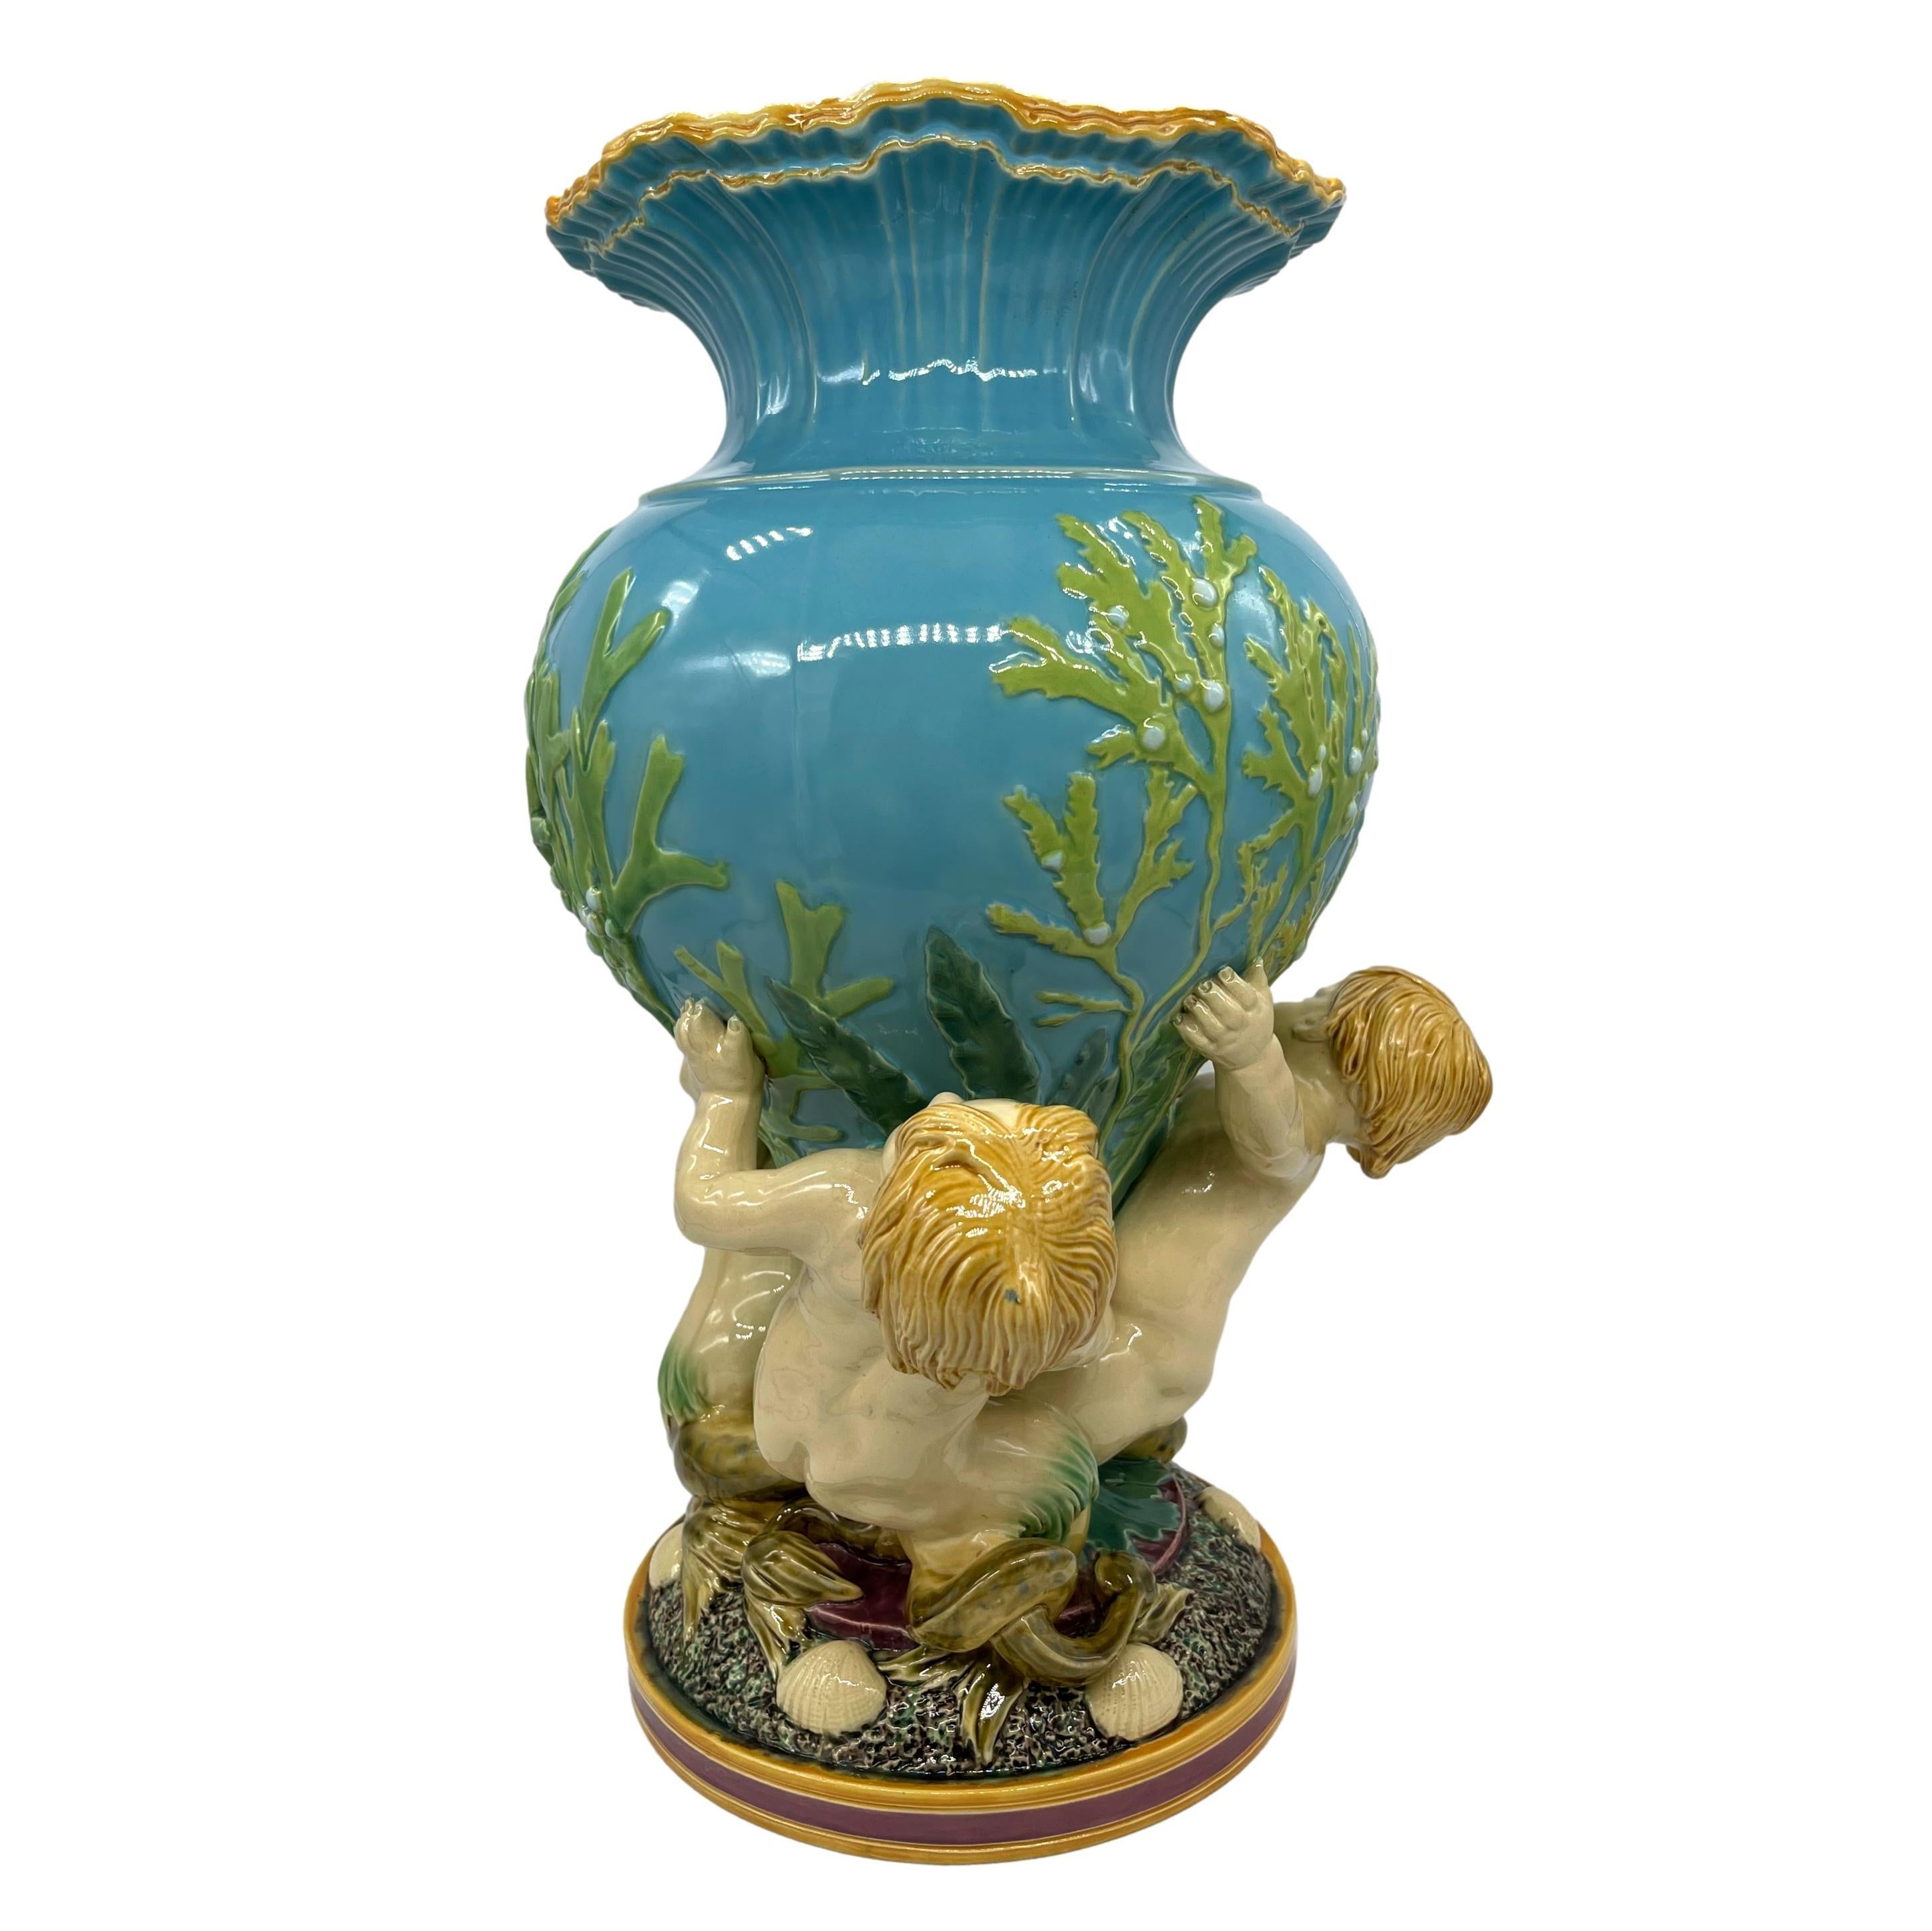 19th Century Minton Majolica Triton Marine Vase on Turquoise Ground, Dated 1868